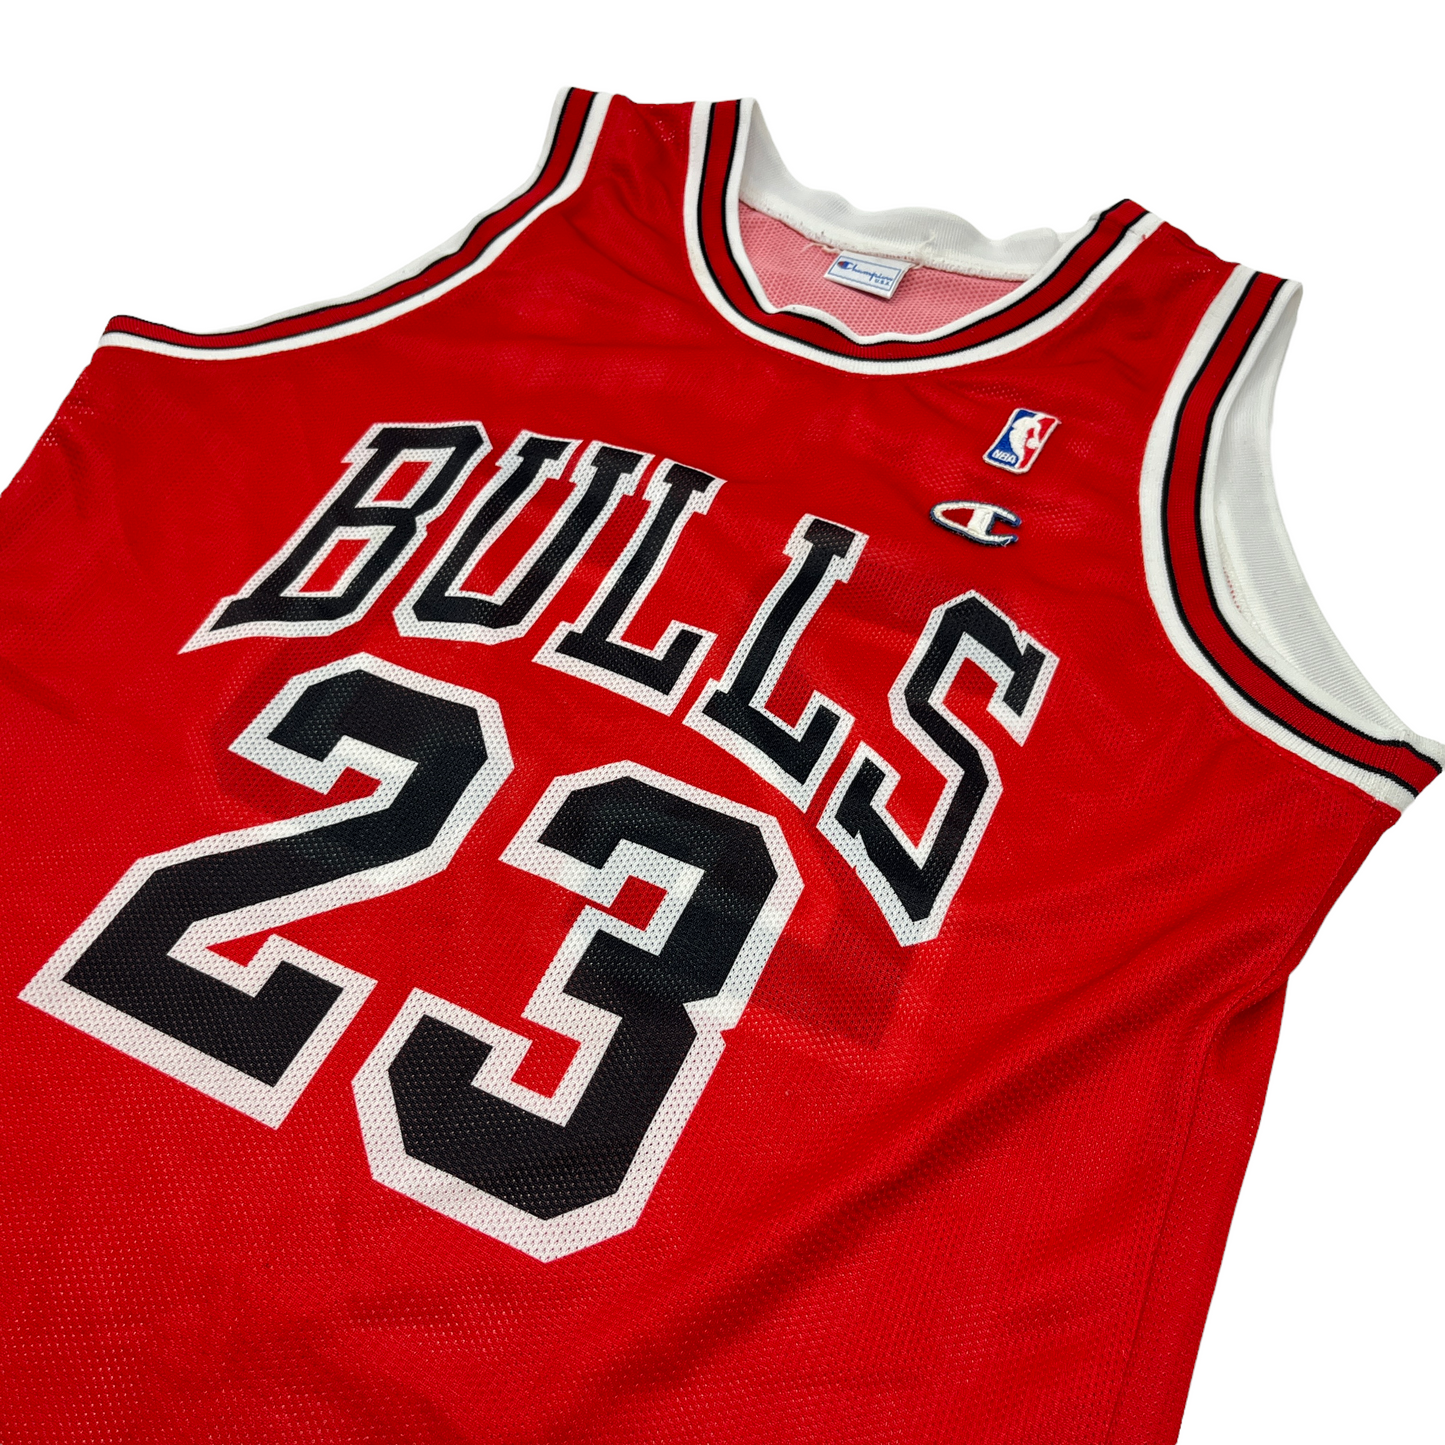 01208 Champion Chicago Bulls Michael Jordan Jersey